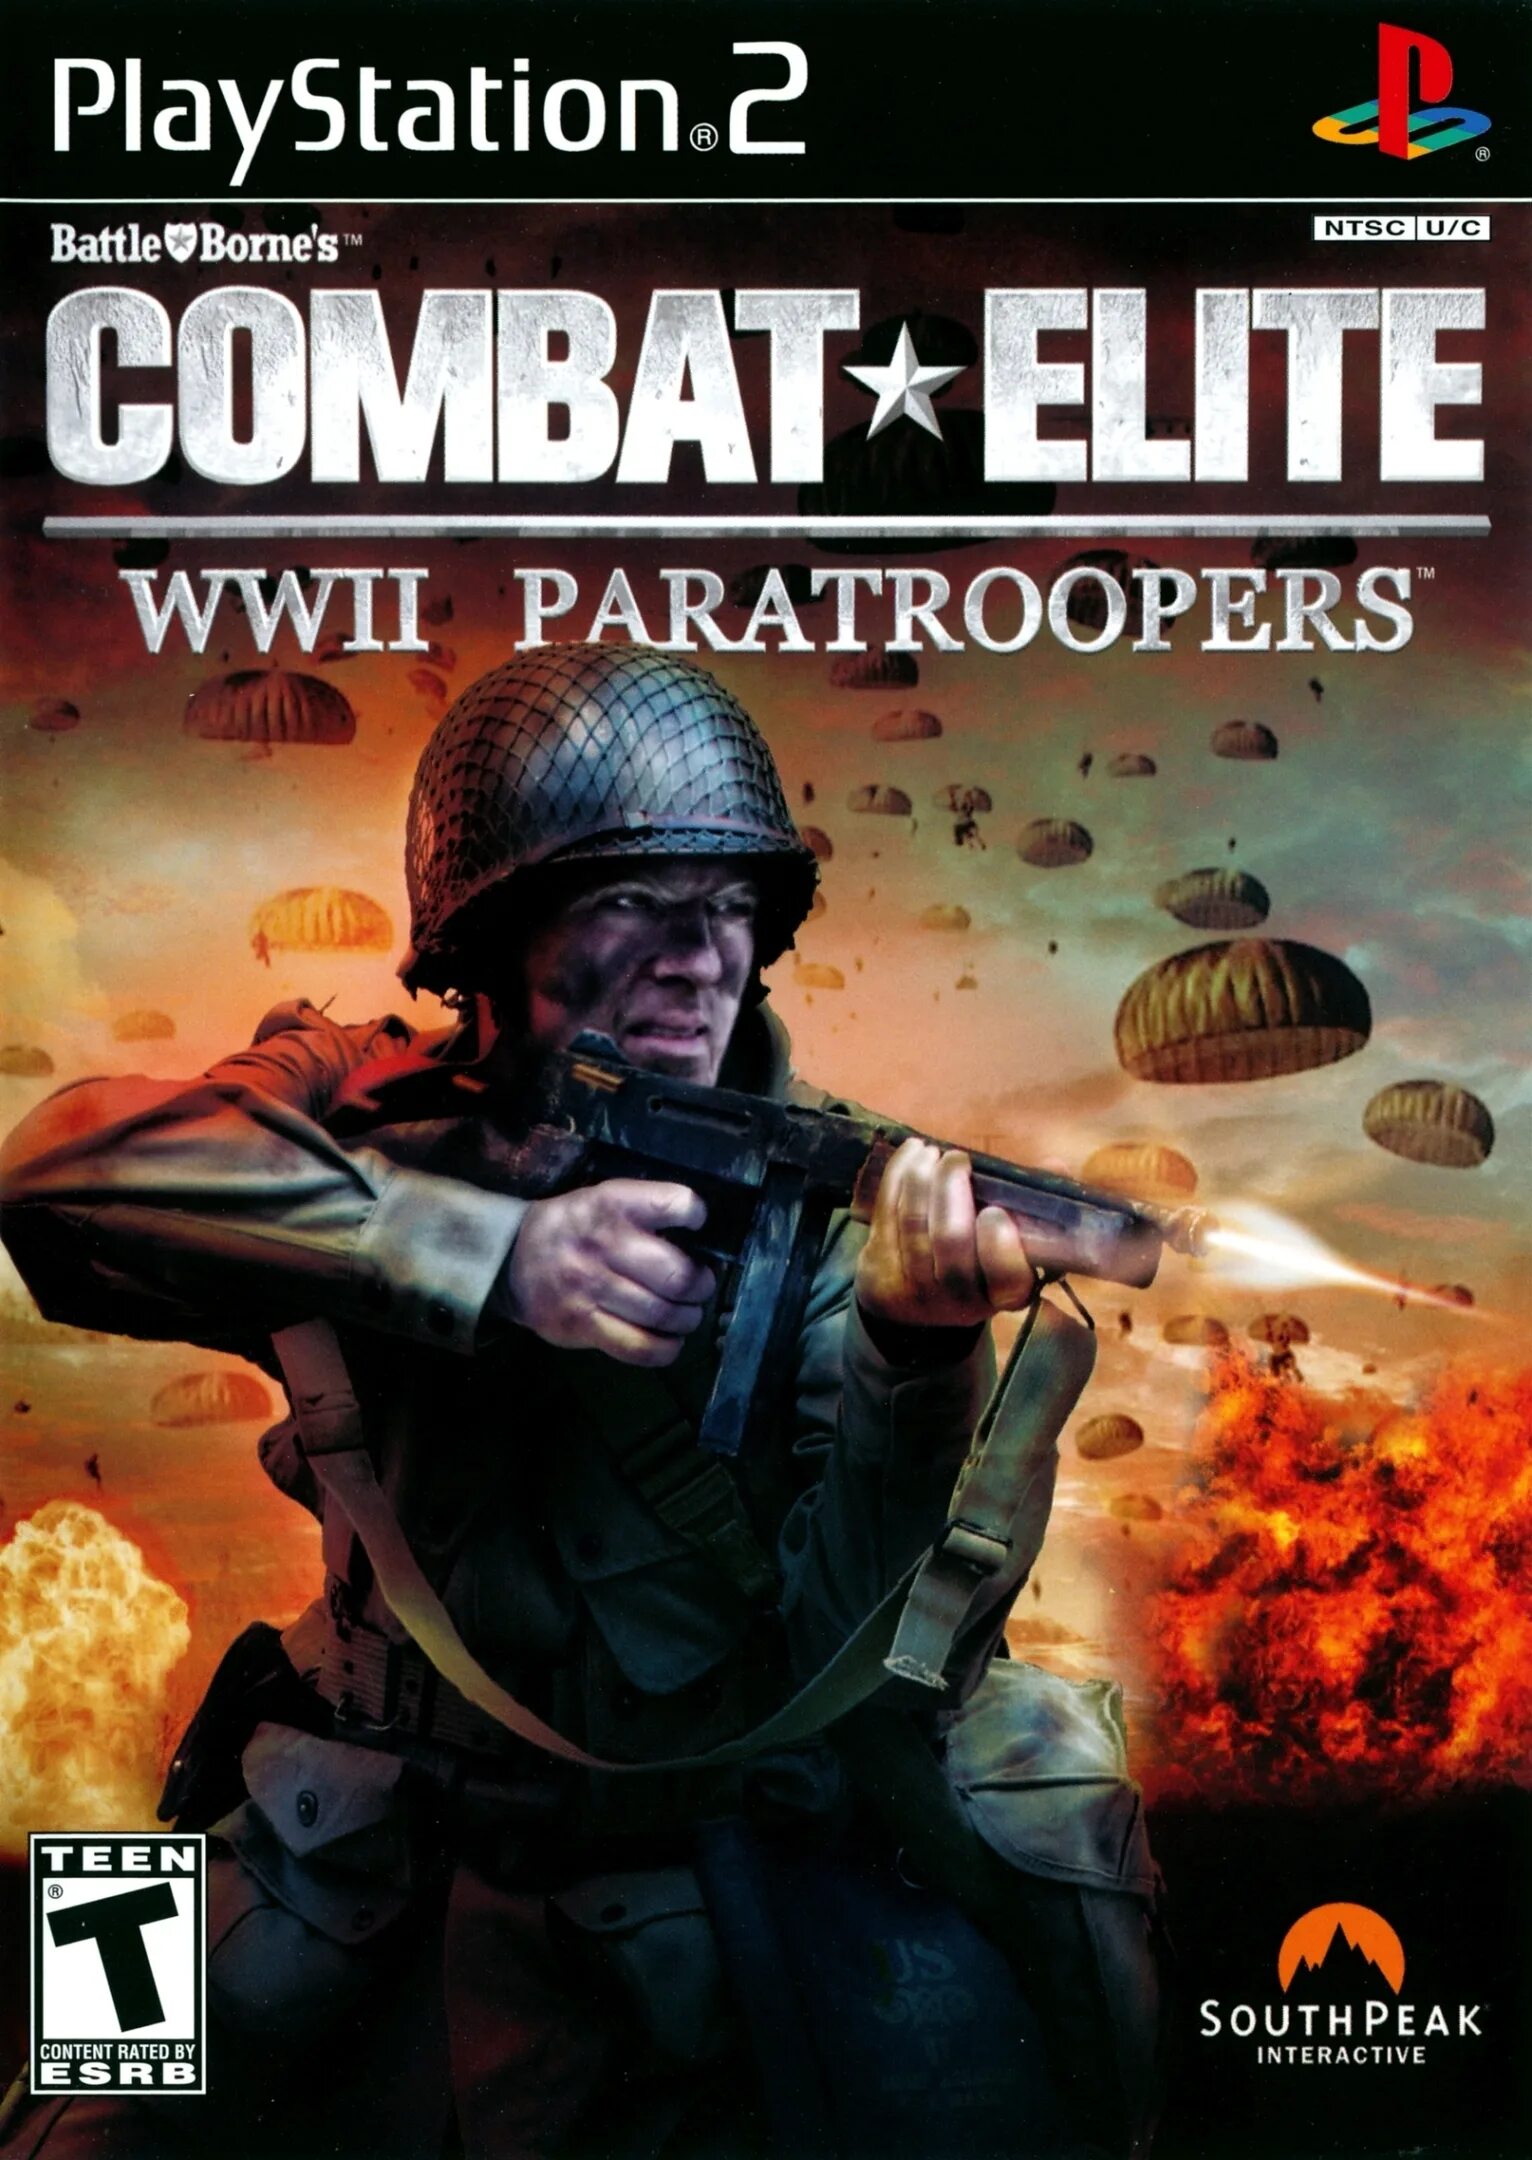 Combat Elite ps2. Combat Elite WWII Paratroopers. Paratrooper игра. Игра на плейстейшен про вторую мировую войну. Игры combat 2